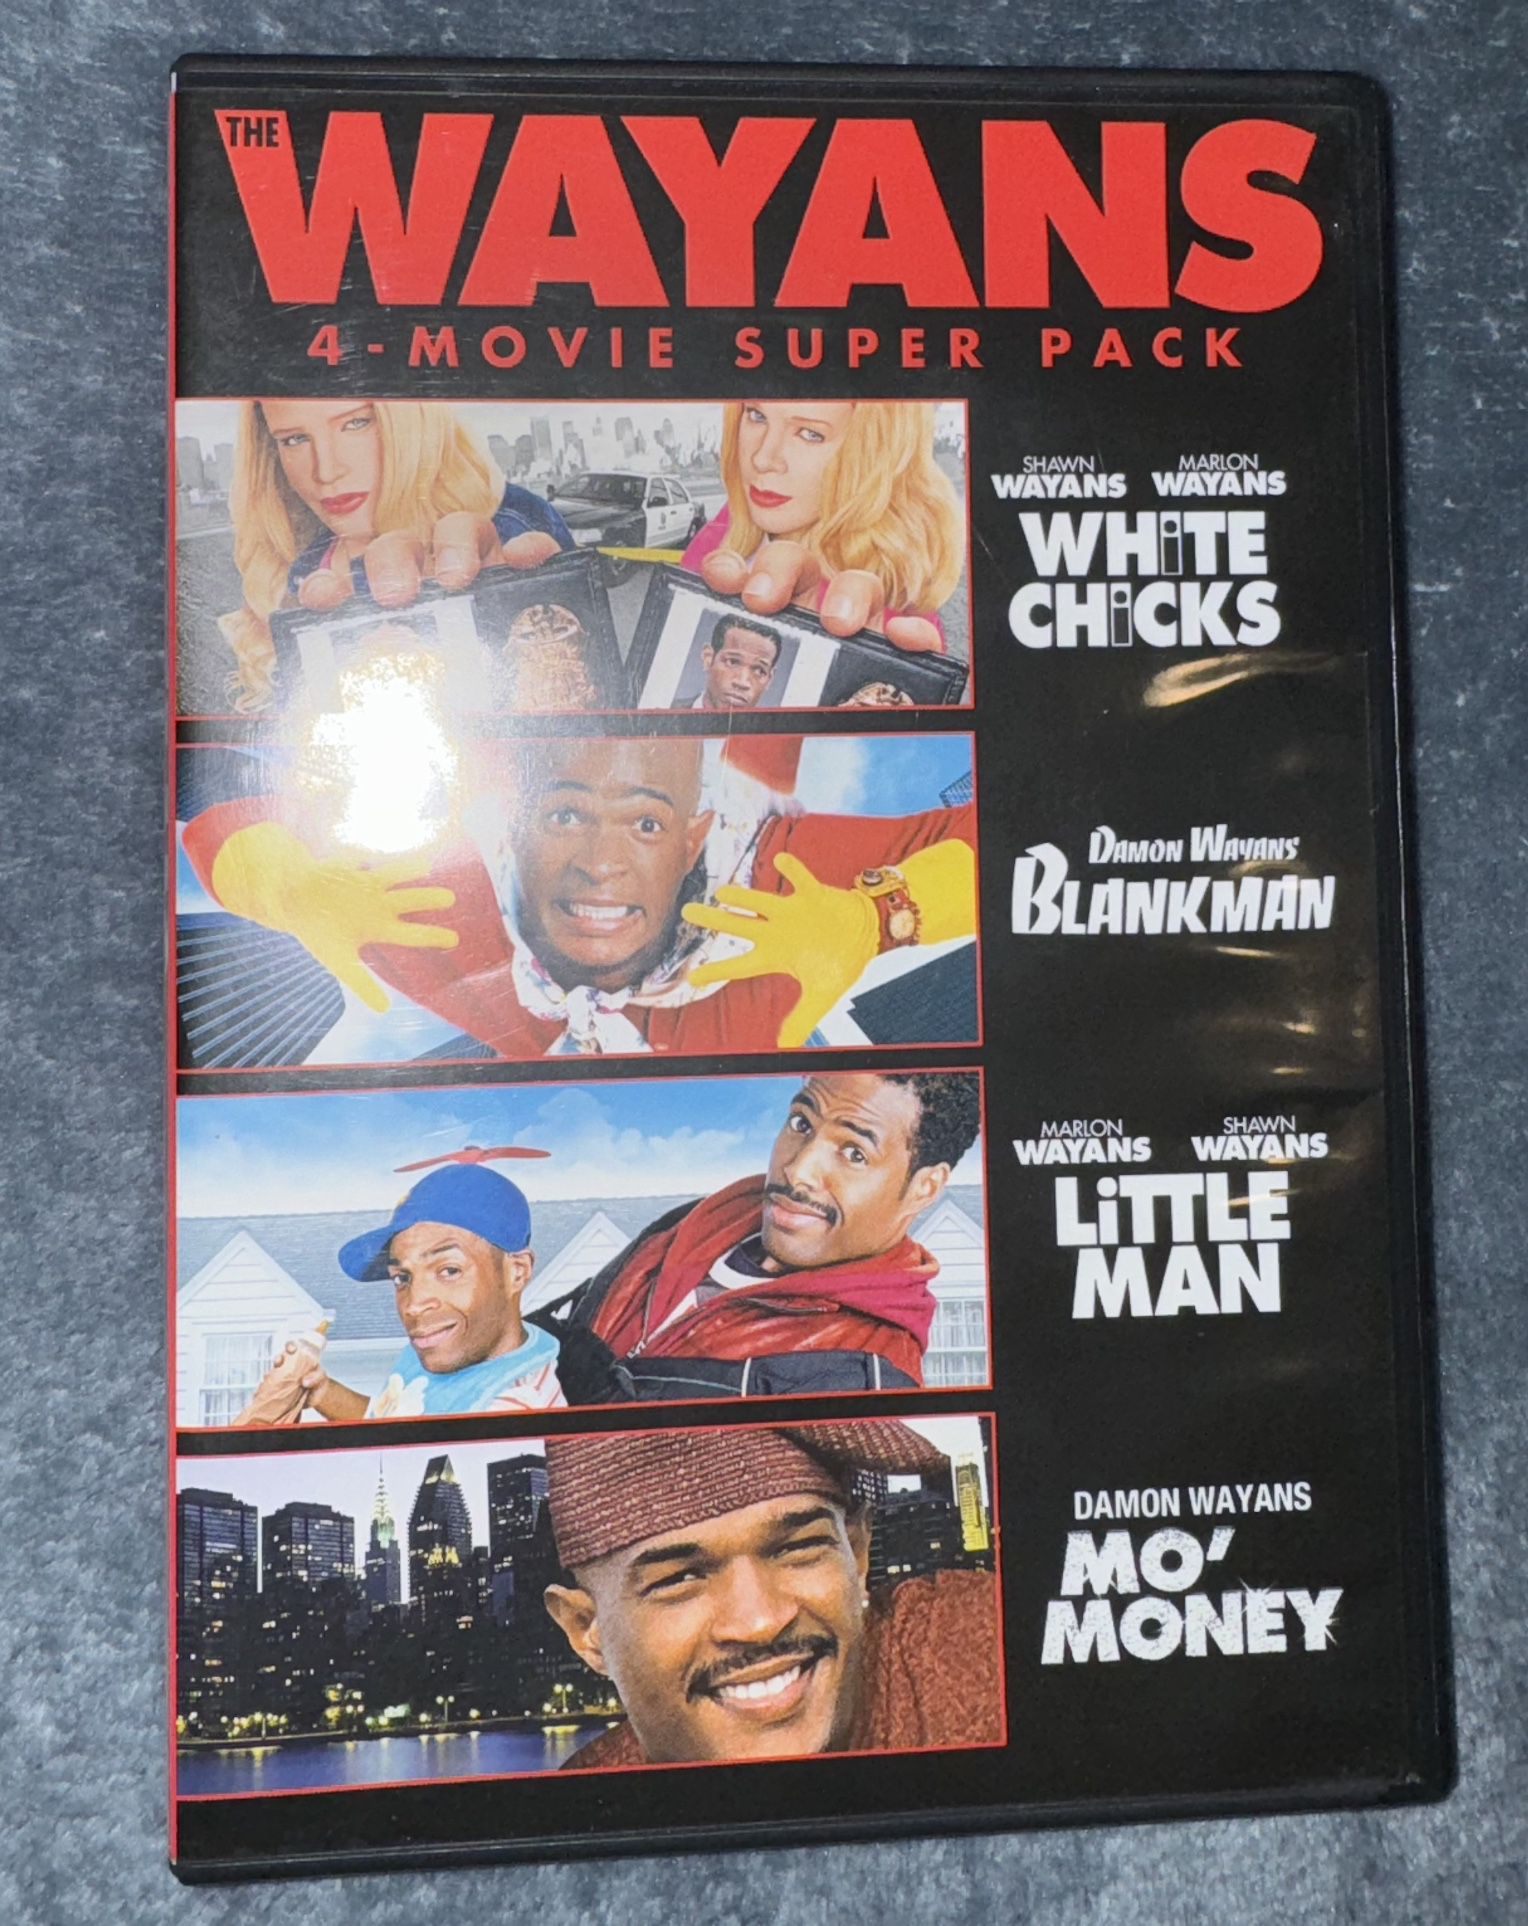 The Wayans 4-Movie Super Pack